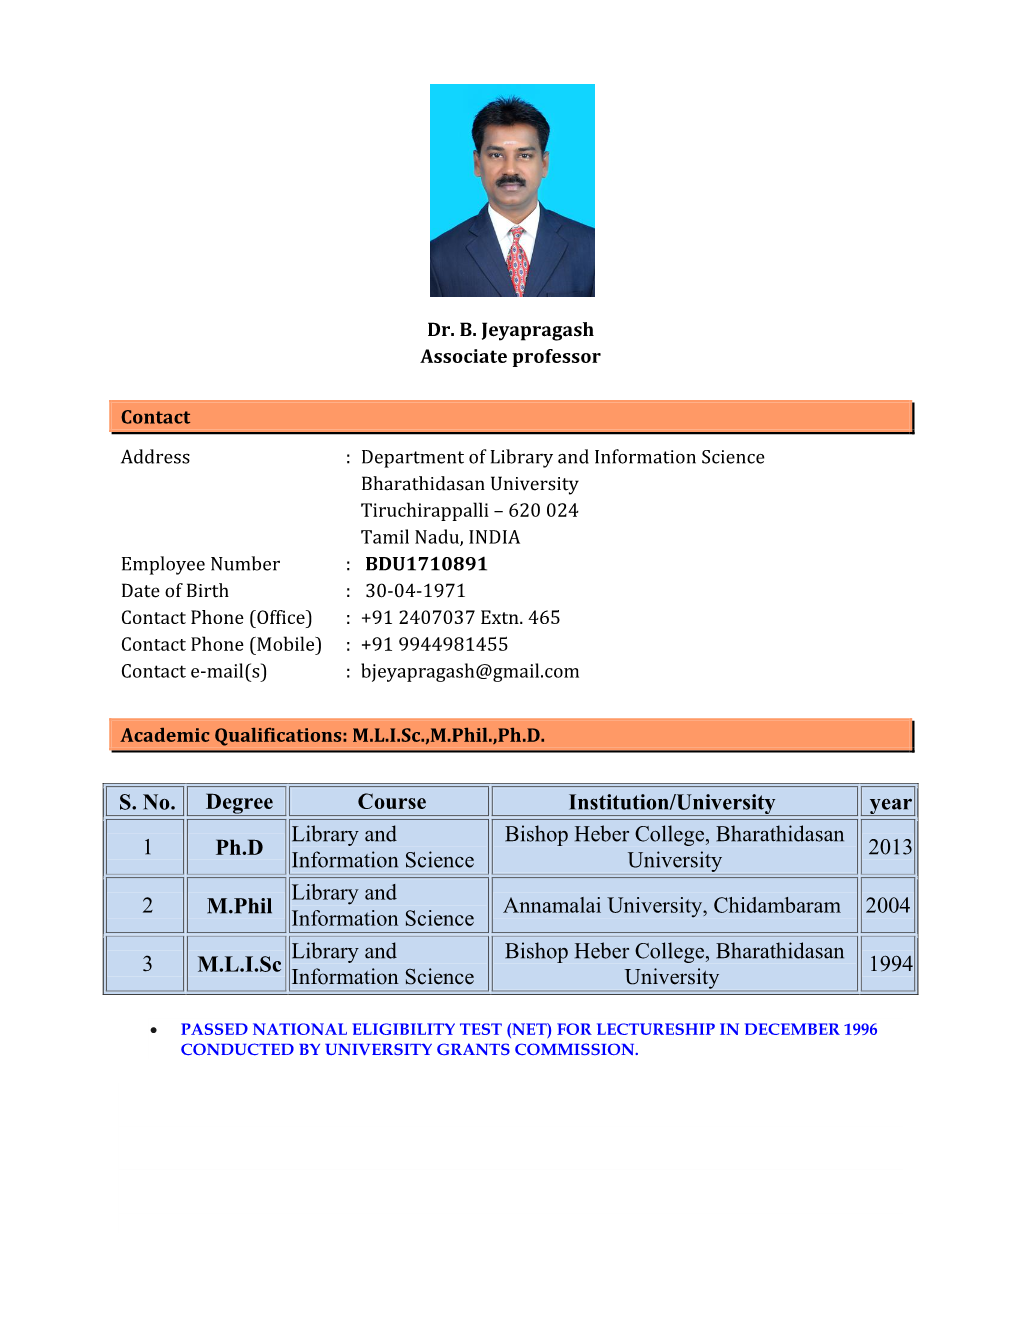 Dr. B. Jeyapragash Associate Professor